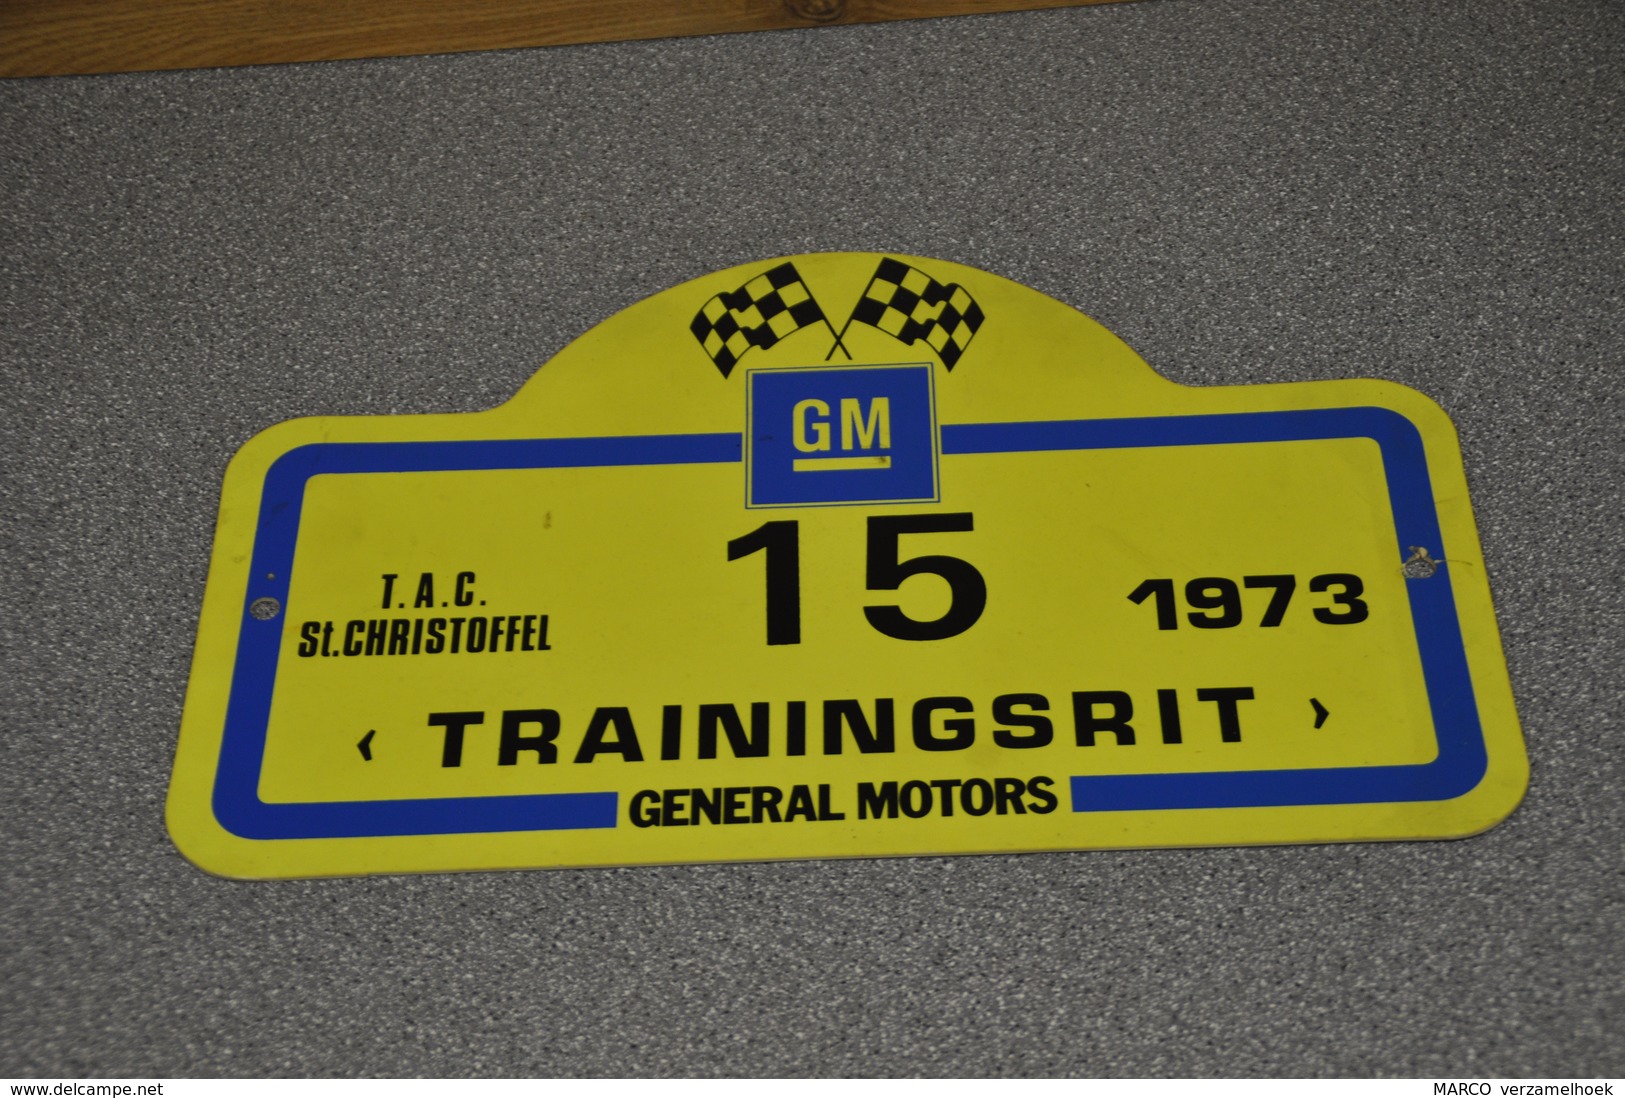 Rally Plaat-rallye Plaque Plastic: Trainingsrit Tilburgse Automobielclub 1973 GM General Motors - Targhe Rallye